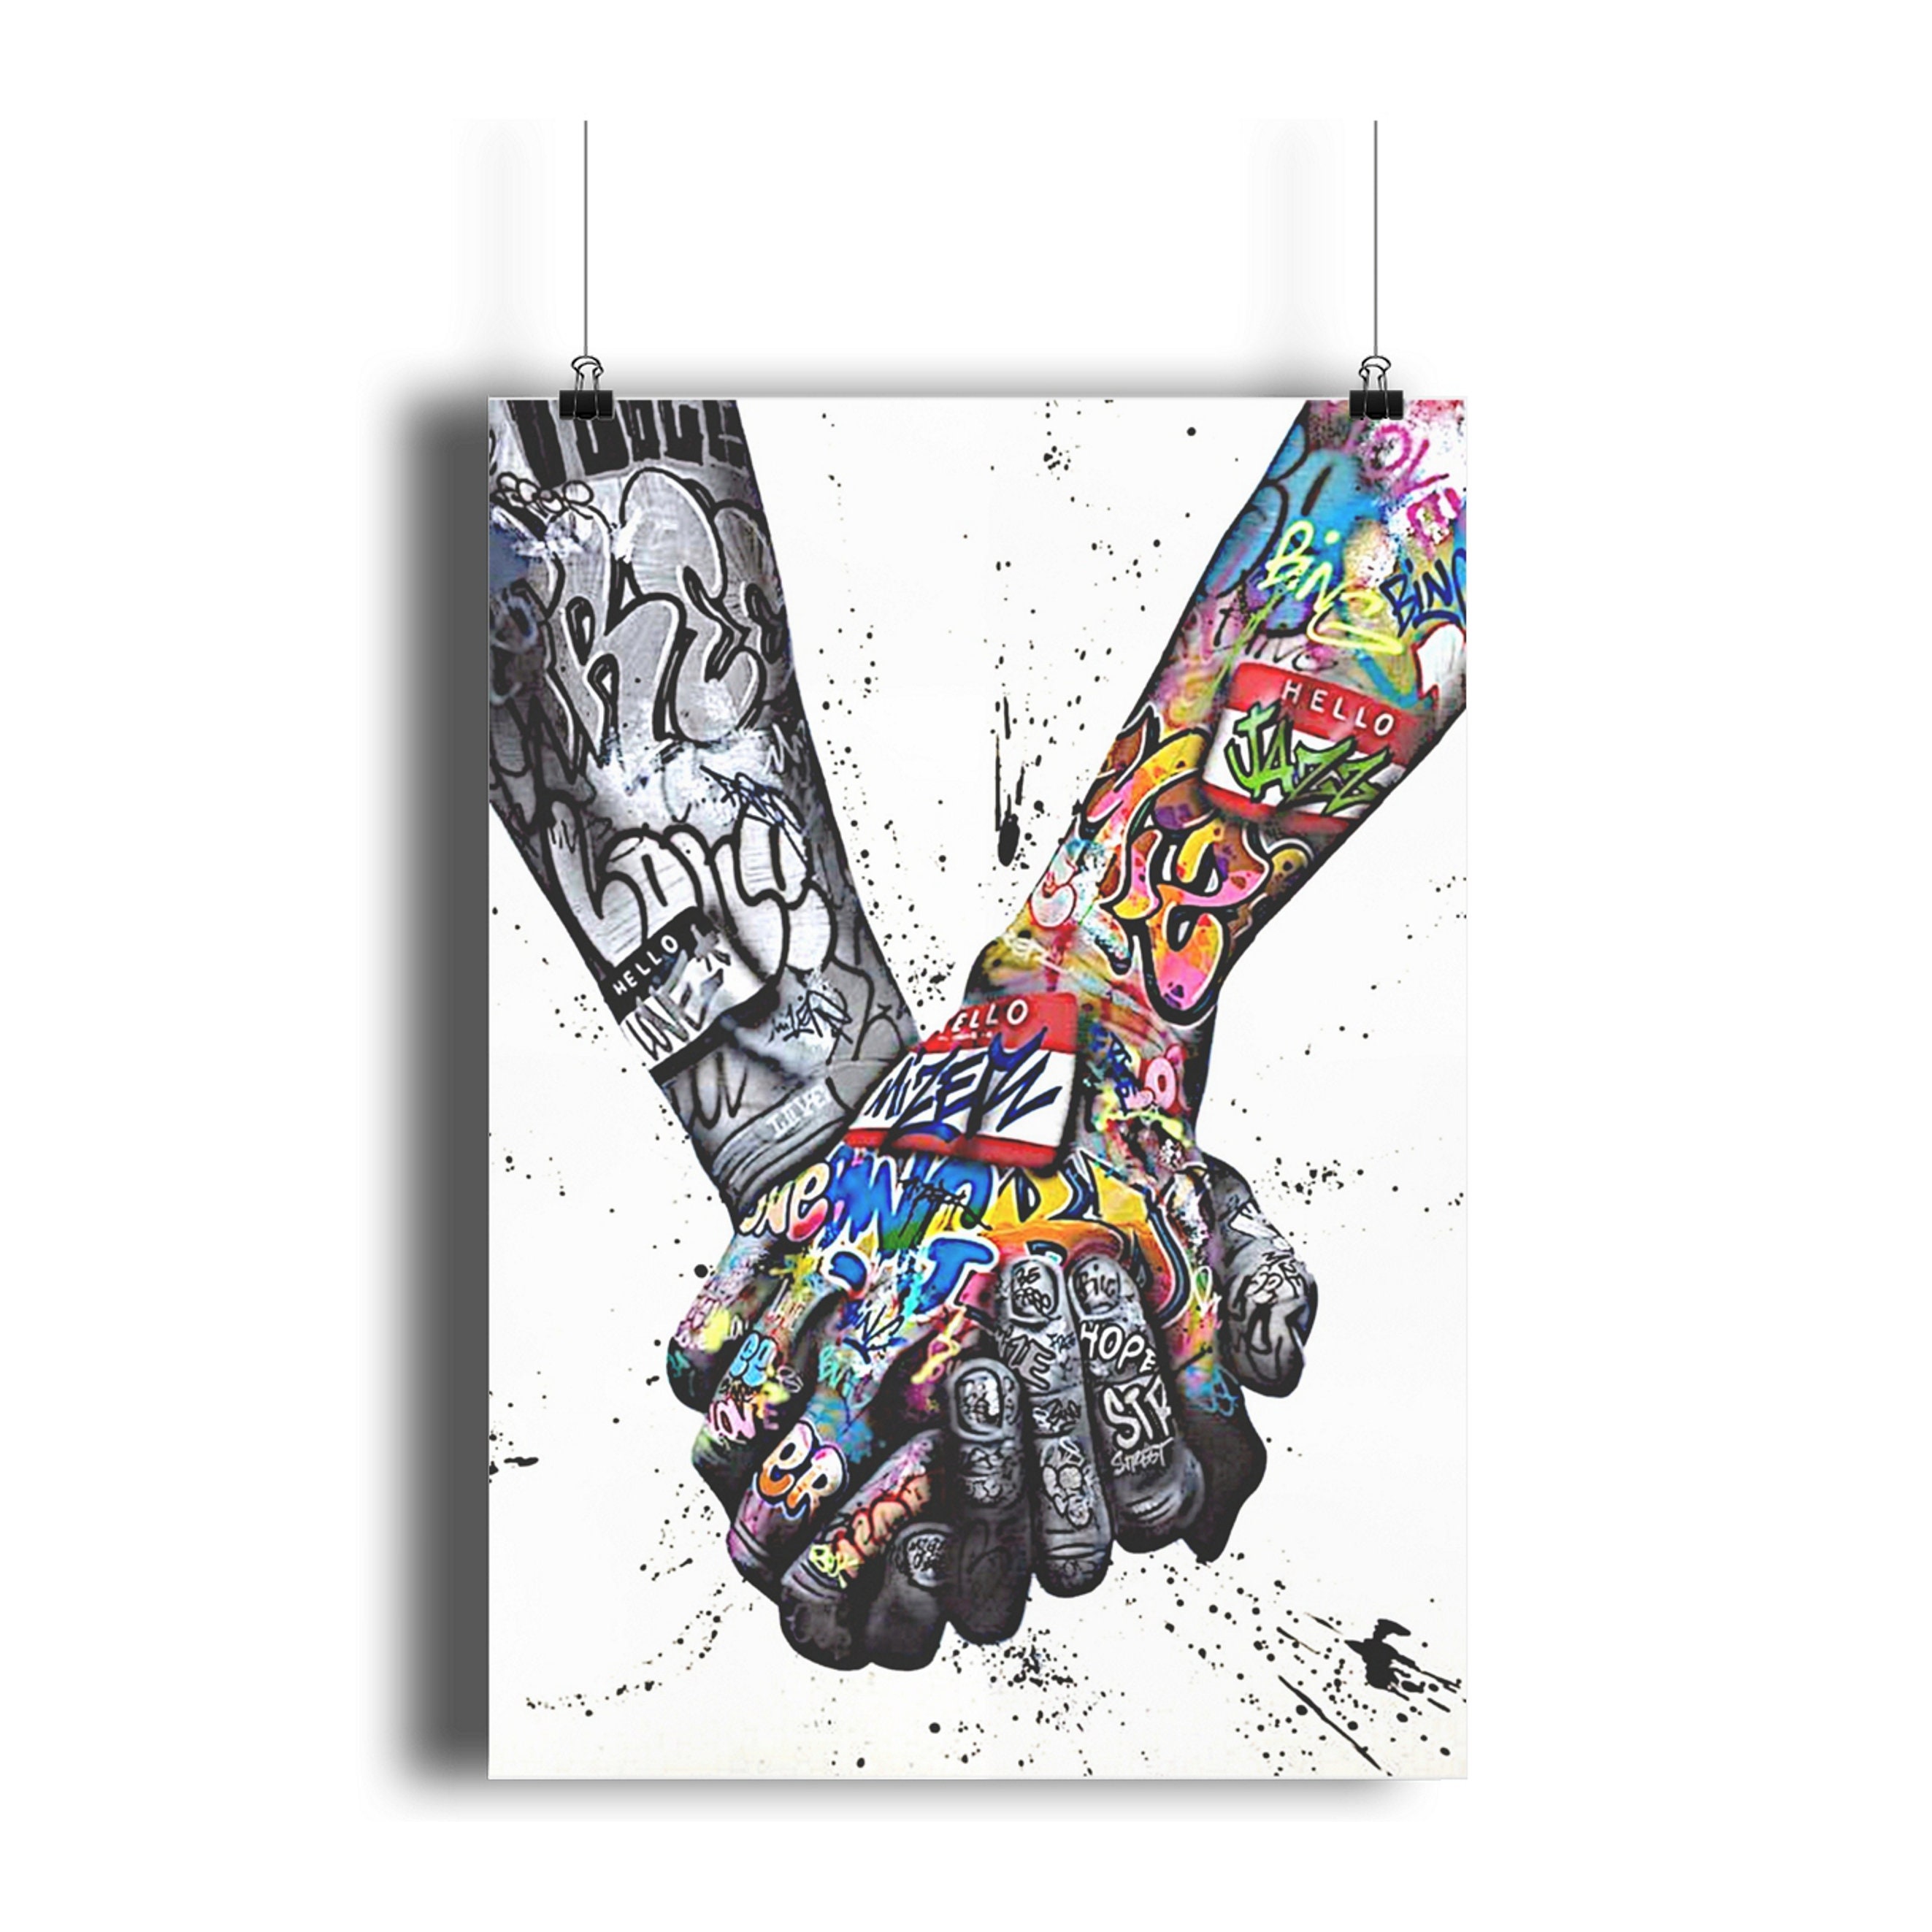 World Unity Holding Hands Graffiti Art Box Framed Printed | Etsy